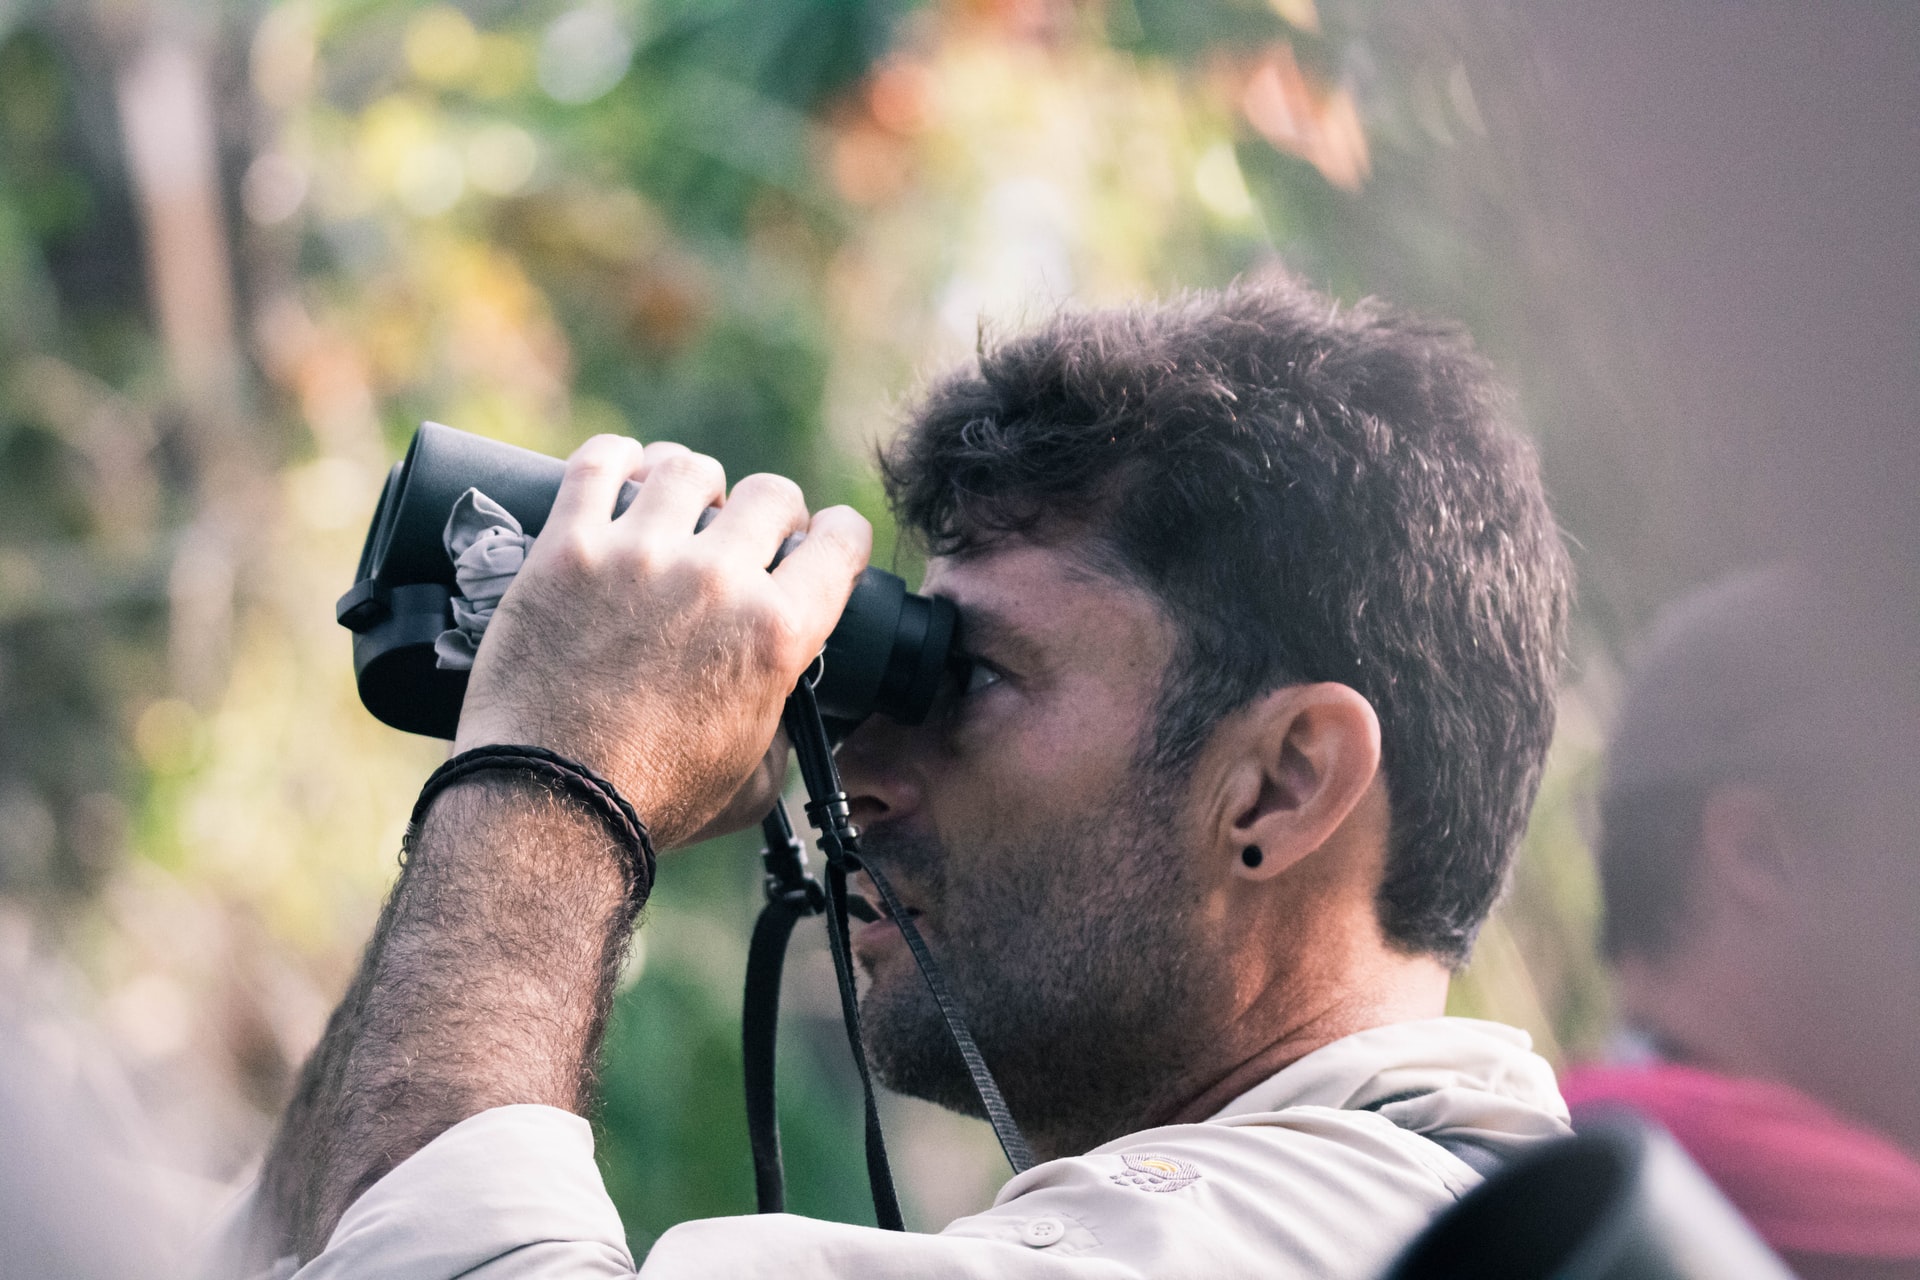 birding in phoenix - close up of man bird watching with binoculars